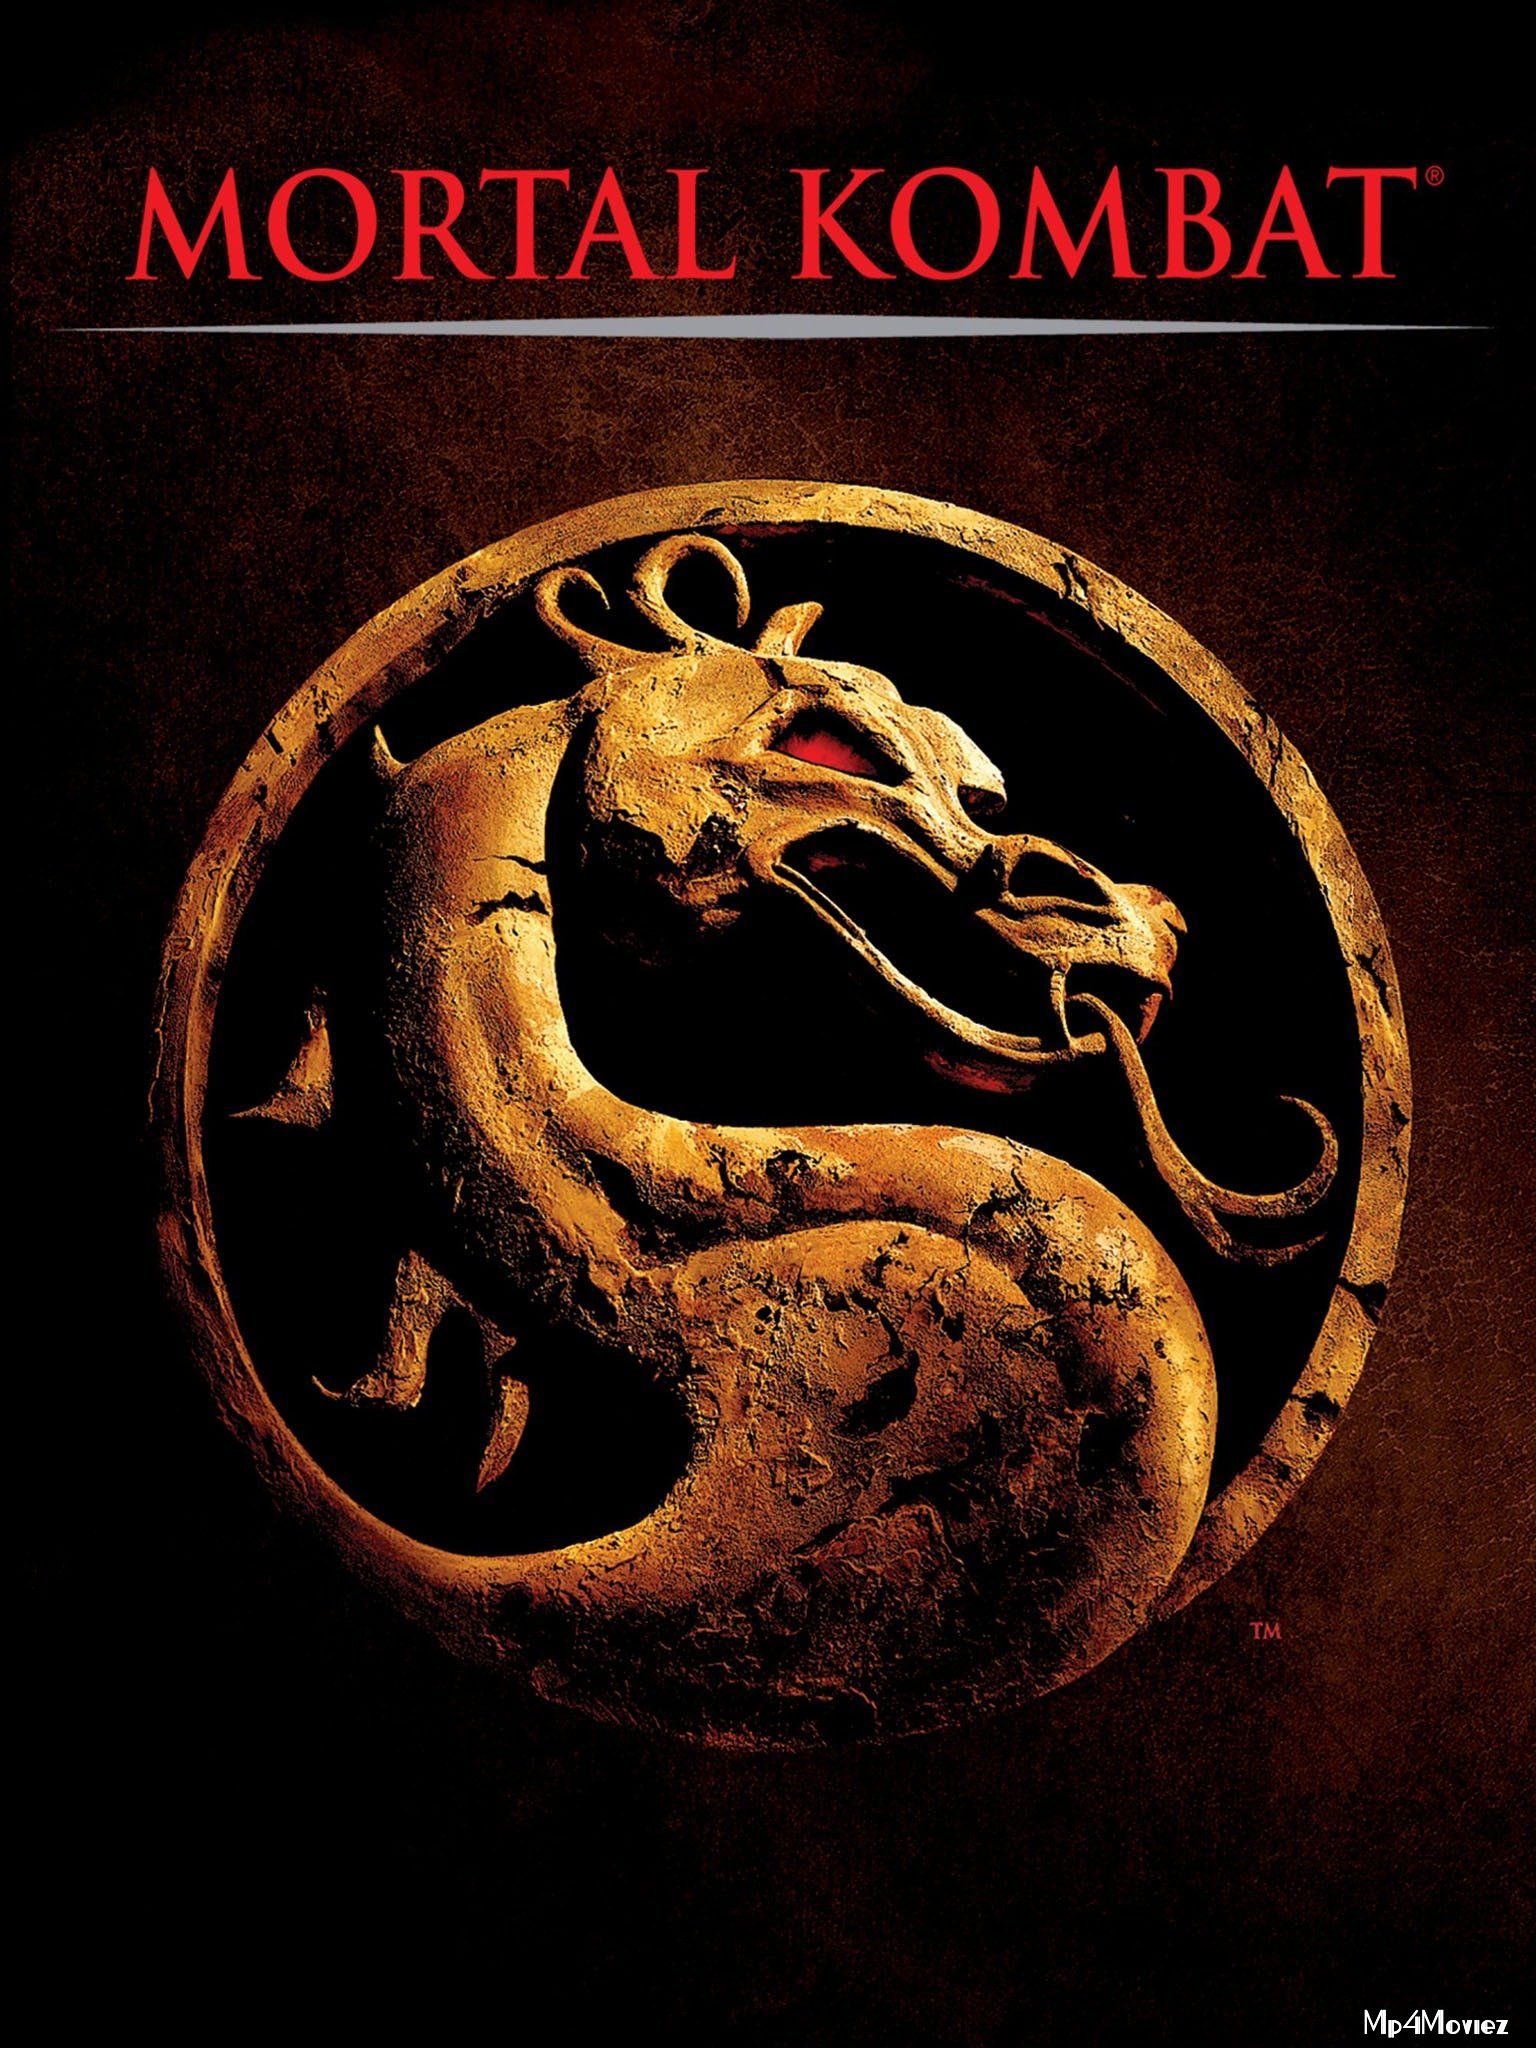 Mortal Kombat (1995) Hindi Dubbed BluRay download full movie